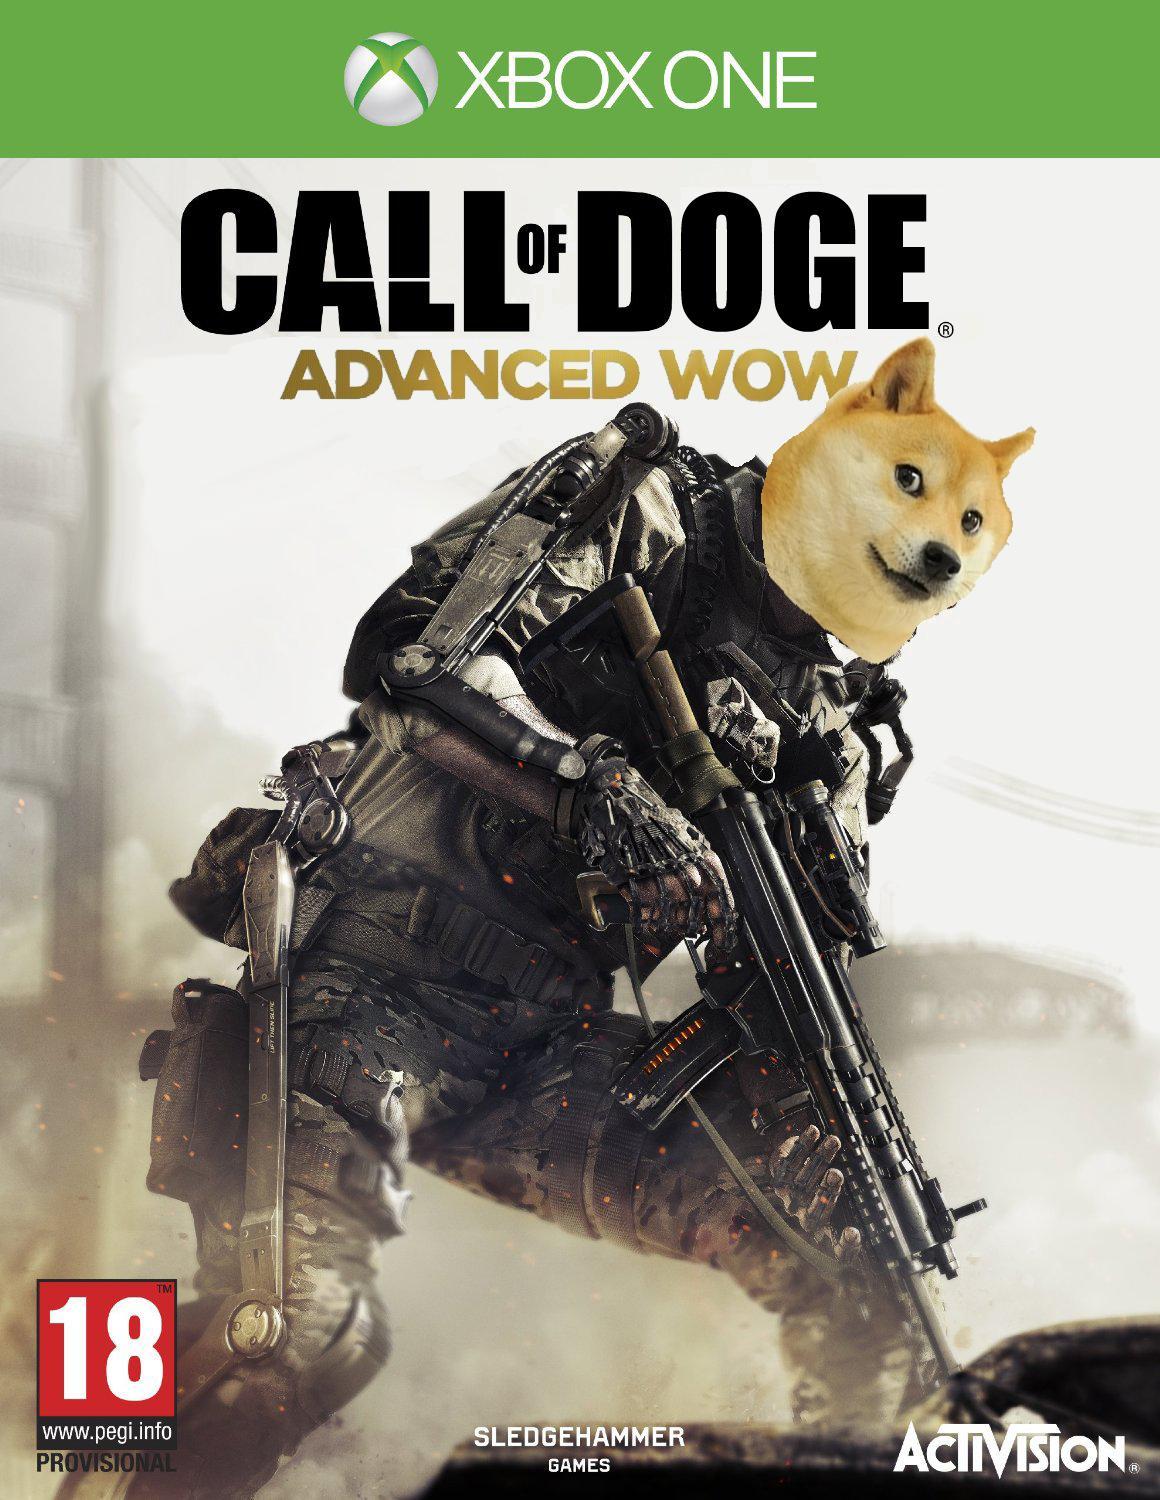 Doge #3 - meme